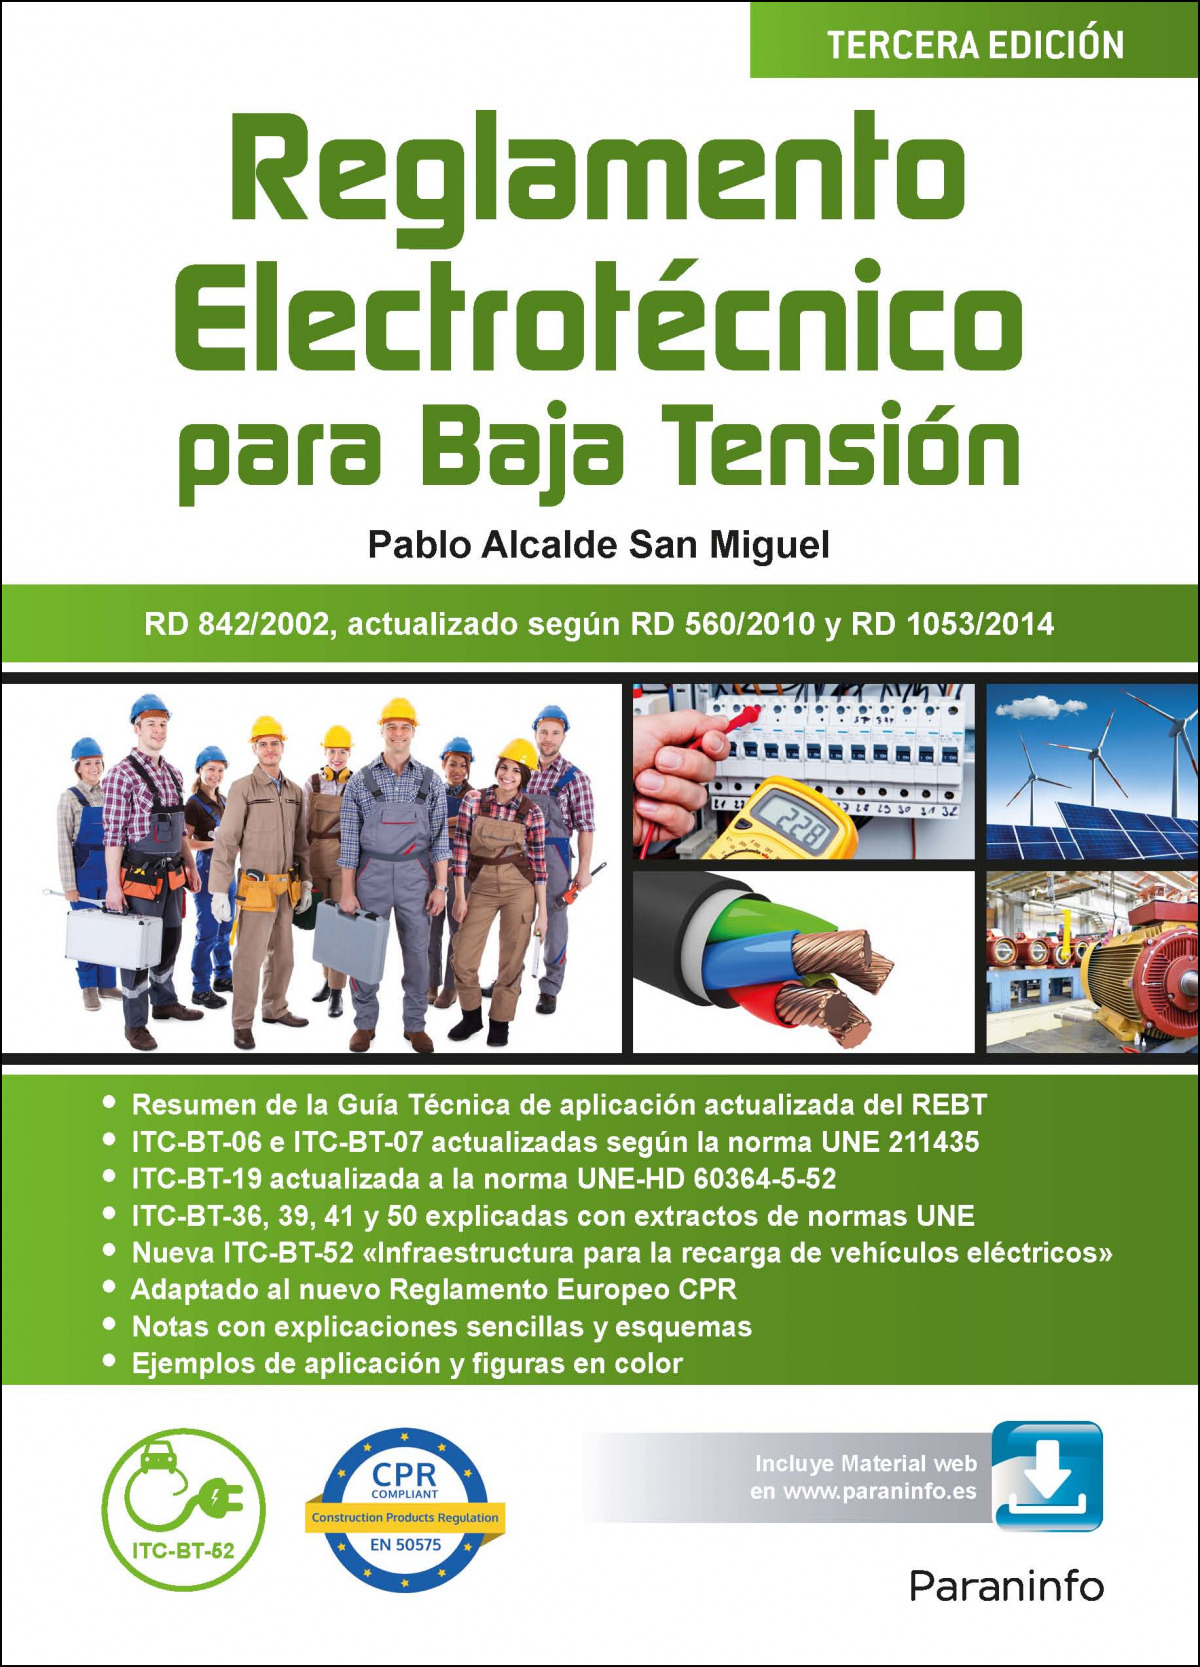 Reglamento electrotcnico de baja tensiÓn. ediciÓn 2017 - Alcalde San Miguel, Pablo